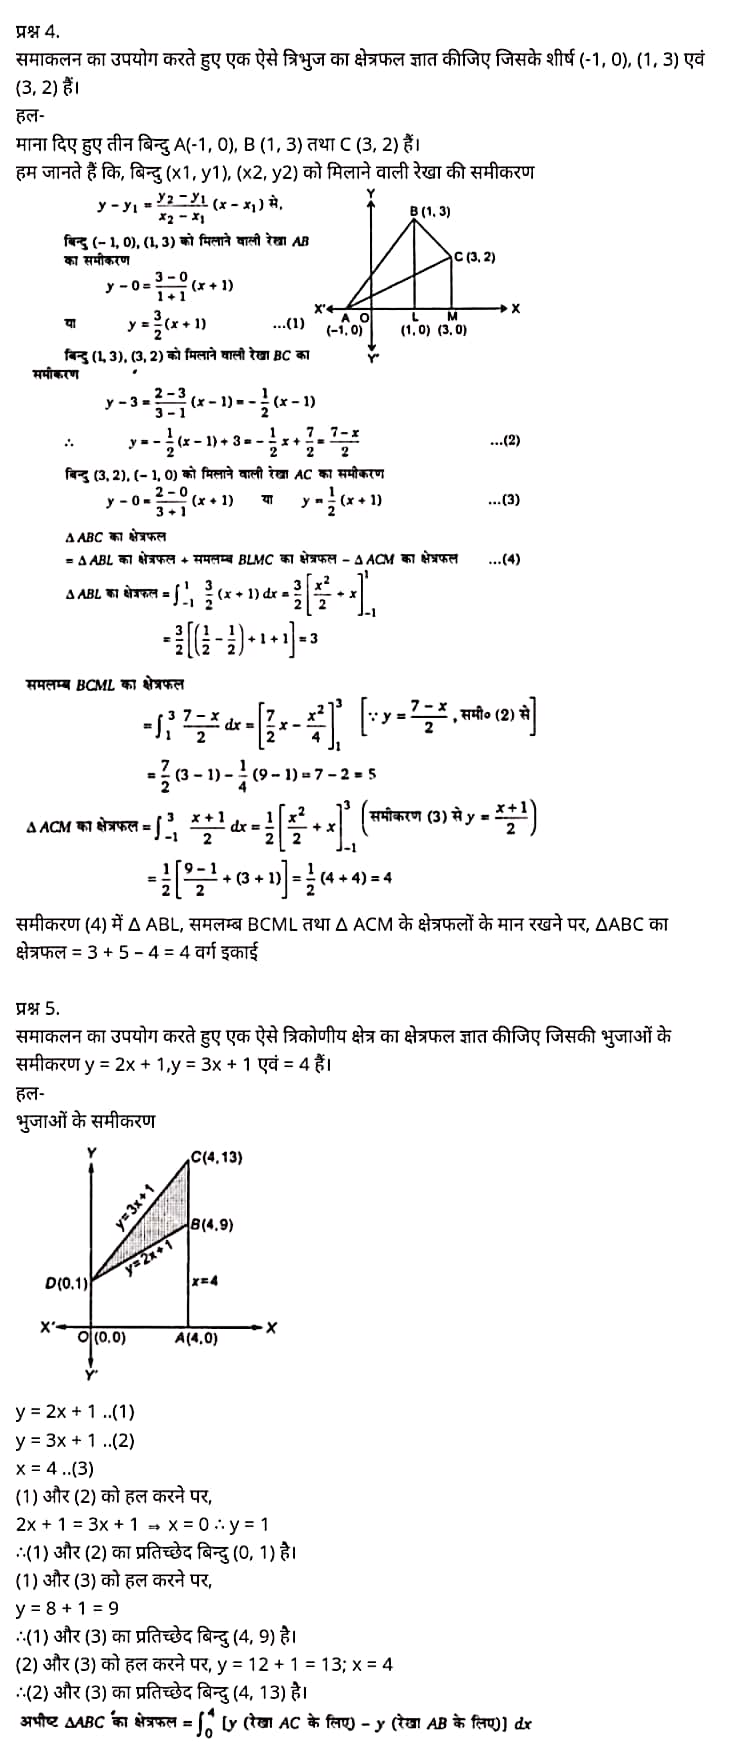 “Class 12 Maths Chapter 8”, “Application of Integrals”, Hindi Medium मैथ्स कक्षा 12 नोट्स pdf,  मैथ्स कक्षा 12 नोट्स 2021 NCERT,  मैथ्स कक्षा 12 PDF,  मैथ्स पुस्तक,  मैथ्स की बुक,  मैथ्स प्रश्नोत्तरी Class 12, 12 वीं मैथ्स पुस्तक RBSE,  बिहार बोर्ड 12 वीं मैथ्स नोट्स,   12th Maths book in hindi, 12th Maths notes in hindi, cbse books for class 12, cbse books in hindi, cbse ncert books, class 12 Maths notes in hindi,  class 12 hindi ncert solutions, Maths 2020, Maths 2021, Maths 2022, Maths book class 12, Maths book in hindi, Maths class 12 in hindi, Maths notes for class 12 up board in hindi, ncert all books, ncert app in hindi, ncert book solution, ncert books class 10, ncert books class 12, ncert books for class 7, ncert books for upsc in hindi, ncert books in hindi class 10, ncert books in hindi for class 12 Maths, ncert books in hindi for class 6, ncert books in hindi pdf, ncert class 12 hindi book, ncert english book, ncert Maths book in hindi, ncert Maths books in hindi pdf, ncert Maths class 12, ncert in hindi,  old ncert books in hindi, online ncert books in hindi,  up board 12th, up board 12th syllabus, up board class 10 hindi book, up board class 12 books, up board class 12 new syllabus, up Board Maths 2020, up Board Maths 2021, up Board Maths 2022, up Board Maths 2023, up board intermediate Maths syllabus, up board intermediate syllabus 2021, Up board Master 2021, up board model paper 2021, up board model paper all subject, up board new syllabus of class 12th Maths, up board paper 2021, Up board syllabus 2021, UP board syllabus 2022,  12 वीं मैथ्स पुस्तक हिंदी में, 12 वीं मैथ्स नोट्स हिंदी में, कक्षा 12 के लिए सीबीएससी पुस्तकें, हिंदी में सीबीएससी पुस्तकें, सीबीएससी  पुस्तकें, कक्षा 12 मैथ्स नोट्स हिंदी में, कक्षा 12 हिंदी एनसीईआरटी समाधान, मैथ्स 2020, मैथ्स 2021, मैथ्स 2022, मैथ्स  बुक क्लास 12, मैथ्स बुक इन हिंदी, बायोलॉजी क्लास 12 हिंदी में, मैथ्स नोट्स इन क्लास 12 यूपी  बोर्ड इन हिंदी, एनसीईआरटी मैथ्स की किताब हिंदी में,  बोर्ड 12 वीं तक, 12 वीं तक की पाठ्यक्रम, बोर्ड कक्षा 10 की हिंदी पुस्तक  , बोर्ड की कक्षा 12 की किताबें, बोर्ड की कक्षा 12 की नई पाठ्यक्रम, बोर्ड मैथ्स 2020, यूपी   बोर्ड मैथ्स 2021, यूपी  बोर्ड मैथ्स 2022, यूपी  बोर्ड मैथ्स 2023, यूपी  बोर्ड इंटरमीडिएट बायोलॉजी सिलेबस, यूपी  बोर्ड इंटरमीडिएट सिलेबस 2021, यूपी  बोर्ड मास्टर 2021, यूपी  बोर्ड मॉडल पेपर 2021, यूपी  मॉडल पेपर सभी विषय, यूपी  बोर्ड न्यू क्लास का सिलेबस  12 वीं मैथ्स, अप बोर्ड पेपर 2021, यूपी बोर्ड सिलेबस 2021, यूपी बोर्ड सिलेबस 2022,   12 veen maiths buk hindee mein, 12 veen maiths nots hindee mein, seebeeesasee kitaaben 12 ke lie, seebeeesasee kitaaben hindee mein, seebeeesasee enaseeaaratee kitaaben, klaas 12 maiths nots in hindee, klaas 12 hindee enaseeteeaar solyooshans, maiths 2020, maiths 2021, maiths 2022, maiths buk klaas 12, maiths buk in hindee, maiths klaas 12 hindee mein, maiths nots phor klaas 12 ap bord in hindee, nchairt all books, nchairt app in hindi, nchairt book solution, nchairt books klaas 10, nchairt books klaas 12, nchairt books kaksha 7 ke lie, nchairt books for hindi mein hindee mein, nchairt books in hindi kaksha 10, nchairt books in hindi ke lie kaksha 12 ganit, nchairt kitaaben hindee mein kaksha 6 ke lie, nchairt pustaken hindee mein, nchairt books 12 hindee pustak, nchairt angrejee pustak mein , nchairt maths book in hindi, nchairt maths books in hindi pdf, nchairt maths chlass 12, nchairt in hindi, puraanee nchairt books in hindi, onalain nchairt books in hindi, bord 12 veen, up bord 12 veen ka silebas, up bord klaas 10 hindee kee pustak , bord kee kaksha 12 kee kitaaben, bord kee kaksha 12 kee naee paathyakram, bord kee ganit 2020, bord kee ganit 2021, ganit kee padhaee s 2022, up bord maiths 2023, up bord intarameediet maiths silebas, up bord intarameediet silebas 2021, up bord maastar 2021, up bord modal pepar 2021, up bord modal pepar sabhee vishay, up bord nyoo klaasiks oph klaas 12 veen maiths, up bord pepar 2021, up bord paathyakram 2021, yoopee bord paathyakram 2022,